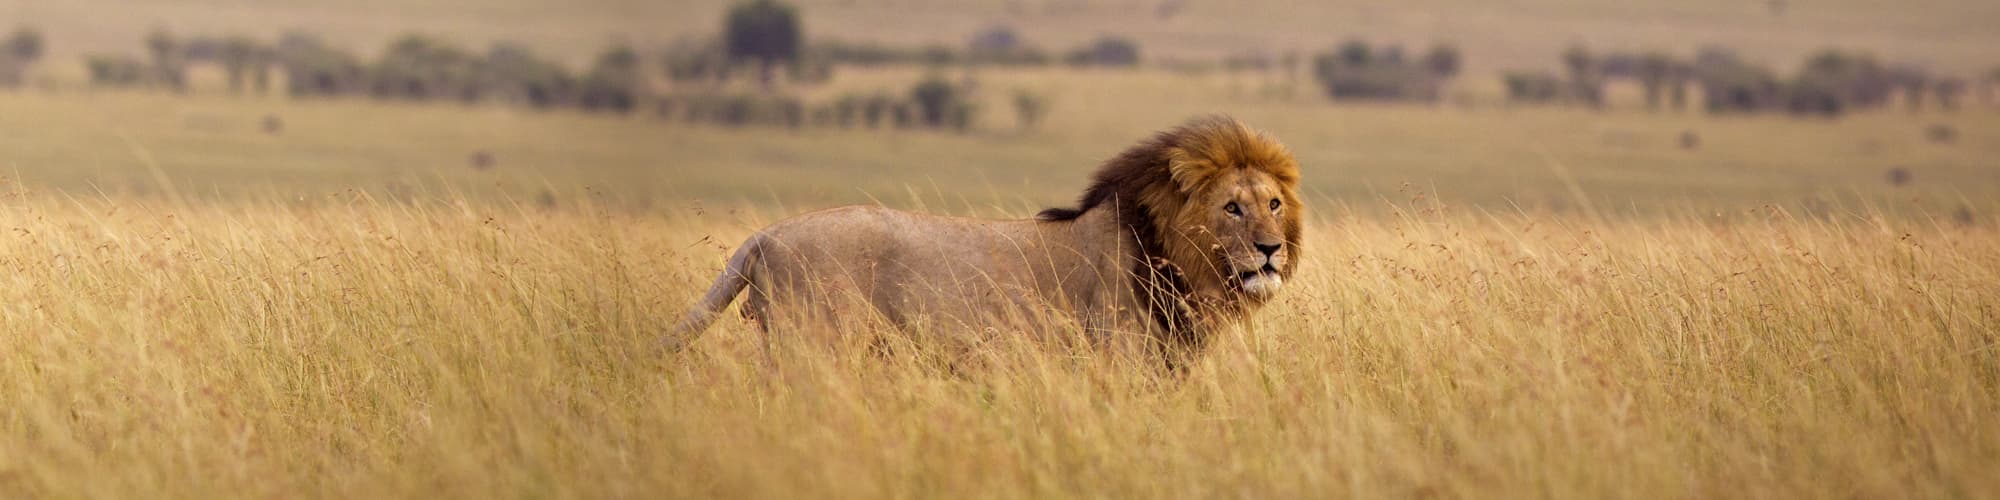 Randonnée Kenya © WL Davies / Istock